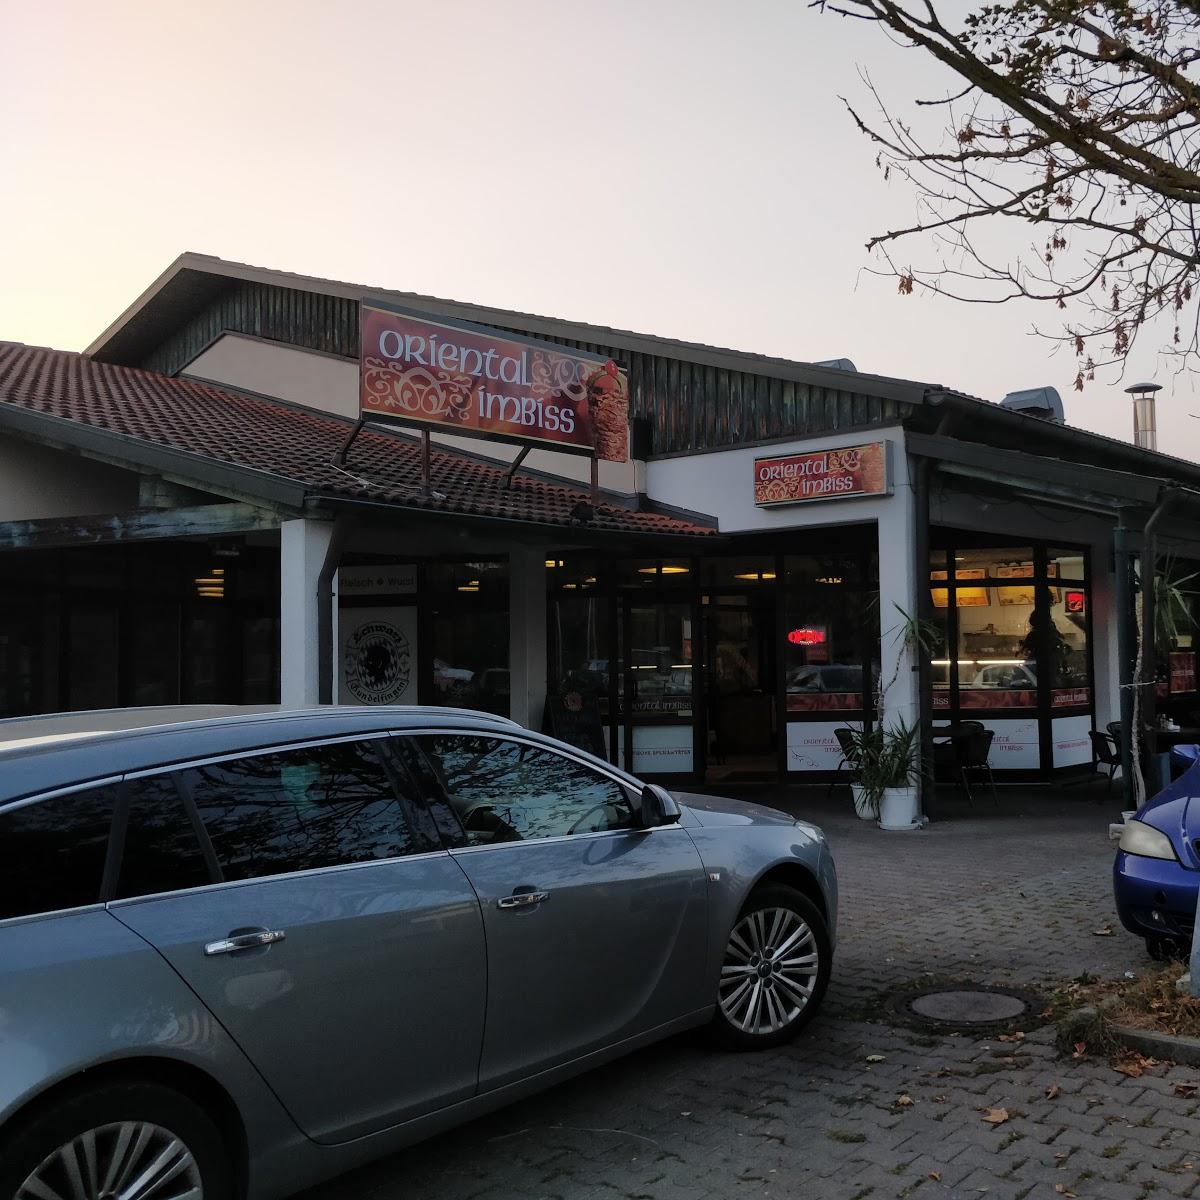 Restaurant "Oriental Imbiss" in Bobingen